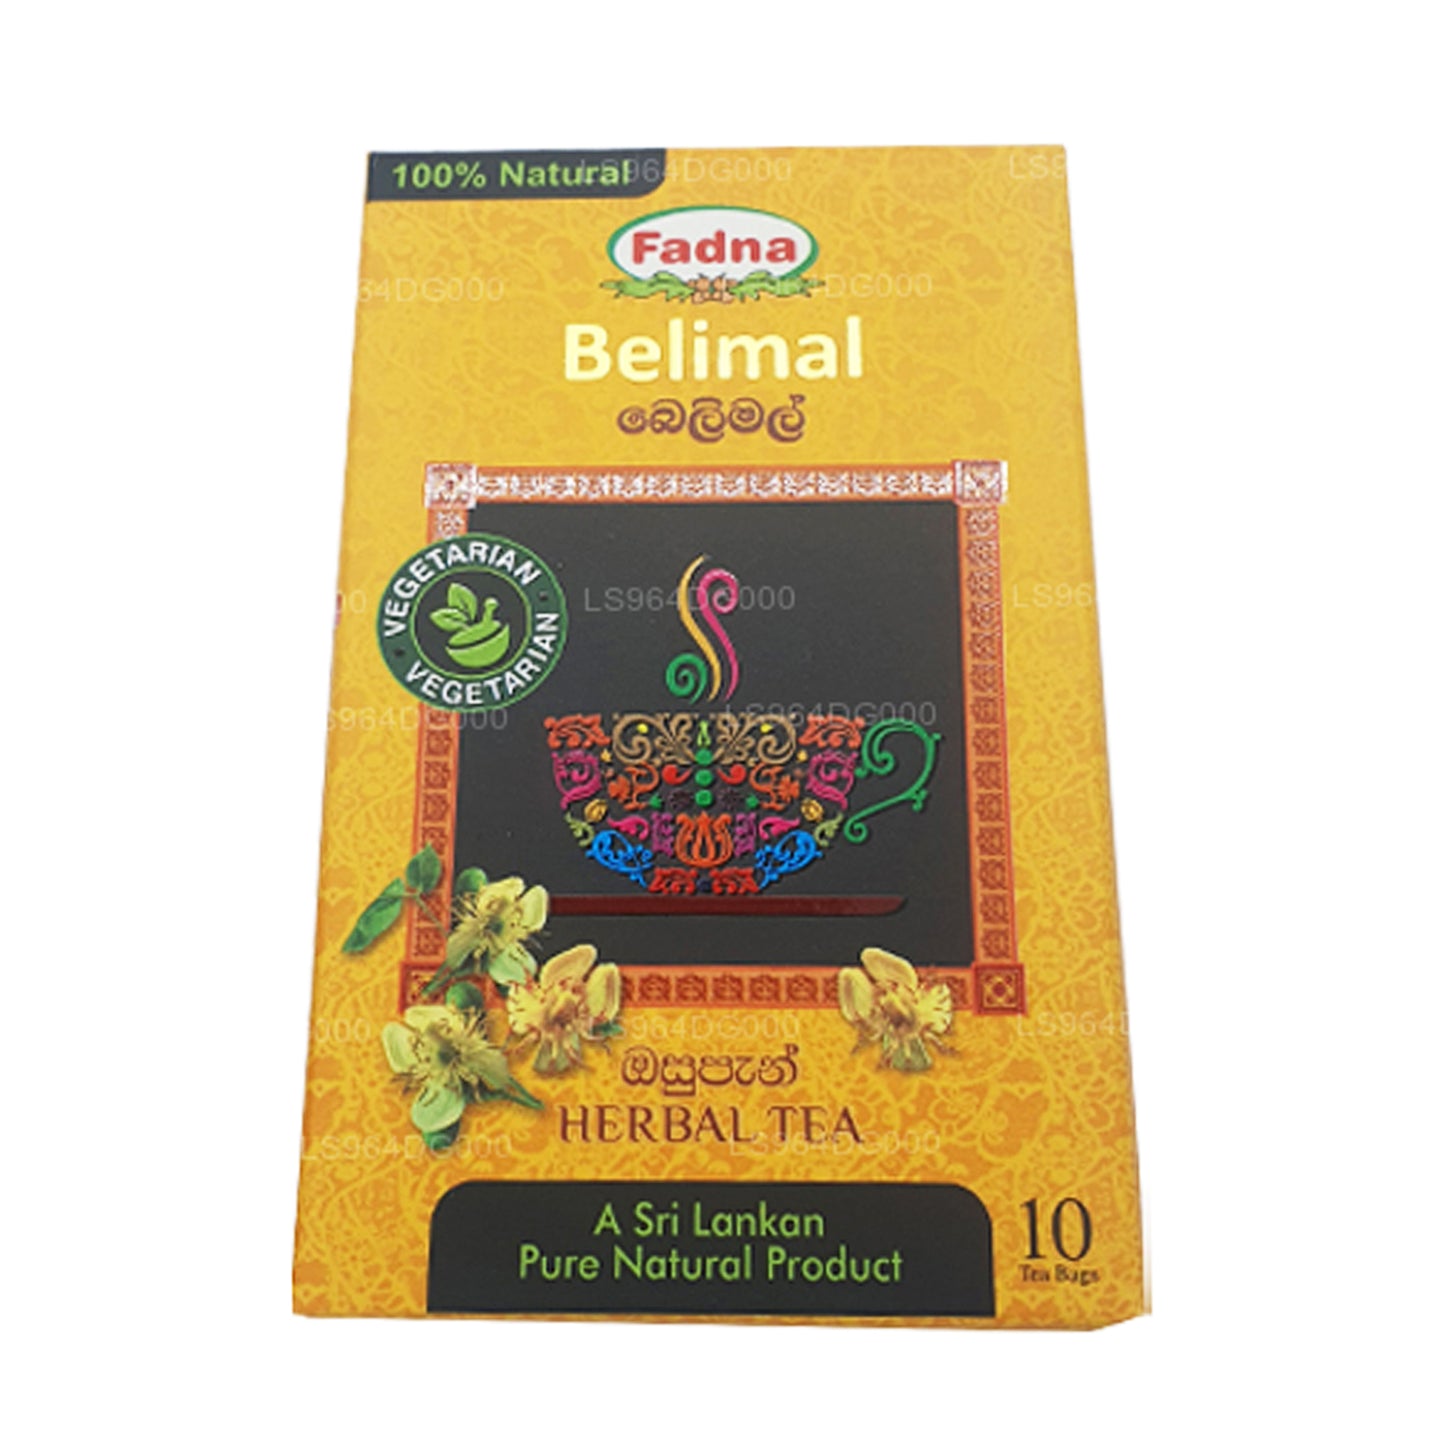 Fadna Belimal 凉茶 (20g) 10 茶包